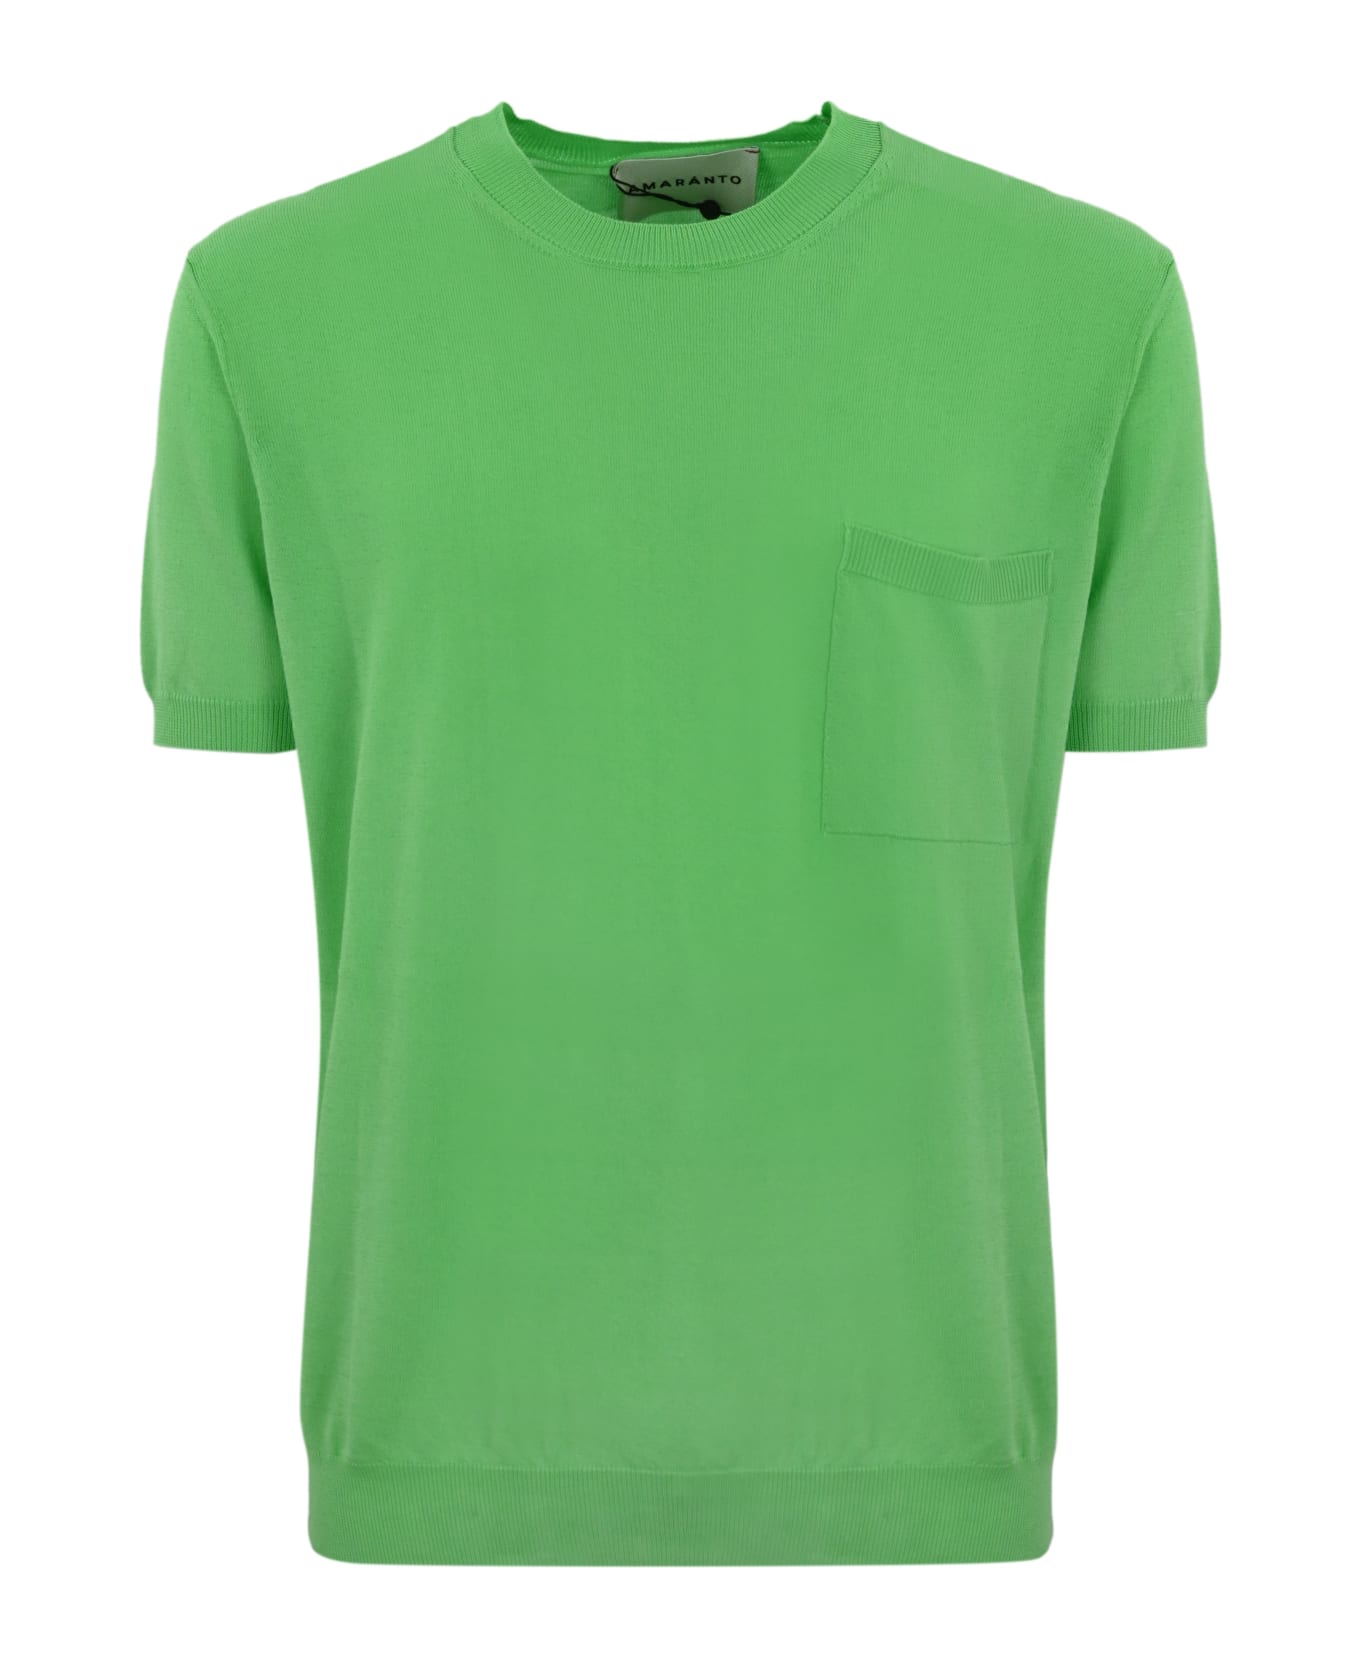 Amaranto T-shirt With Pocket - Menta